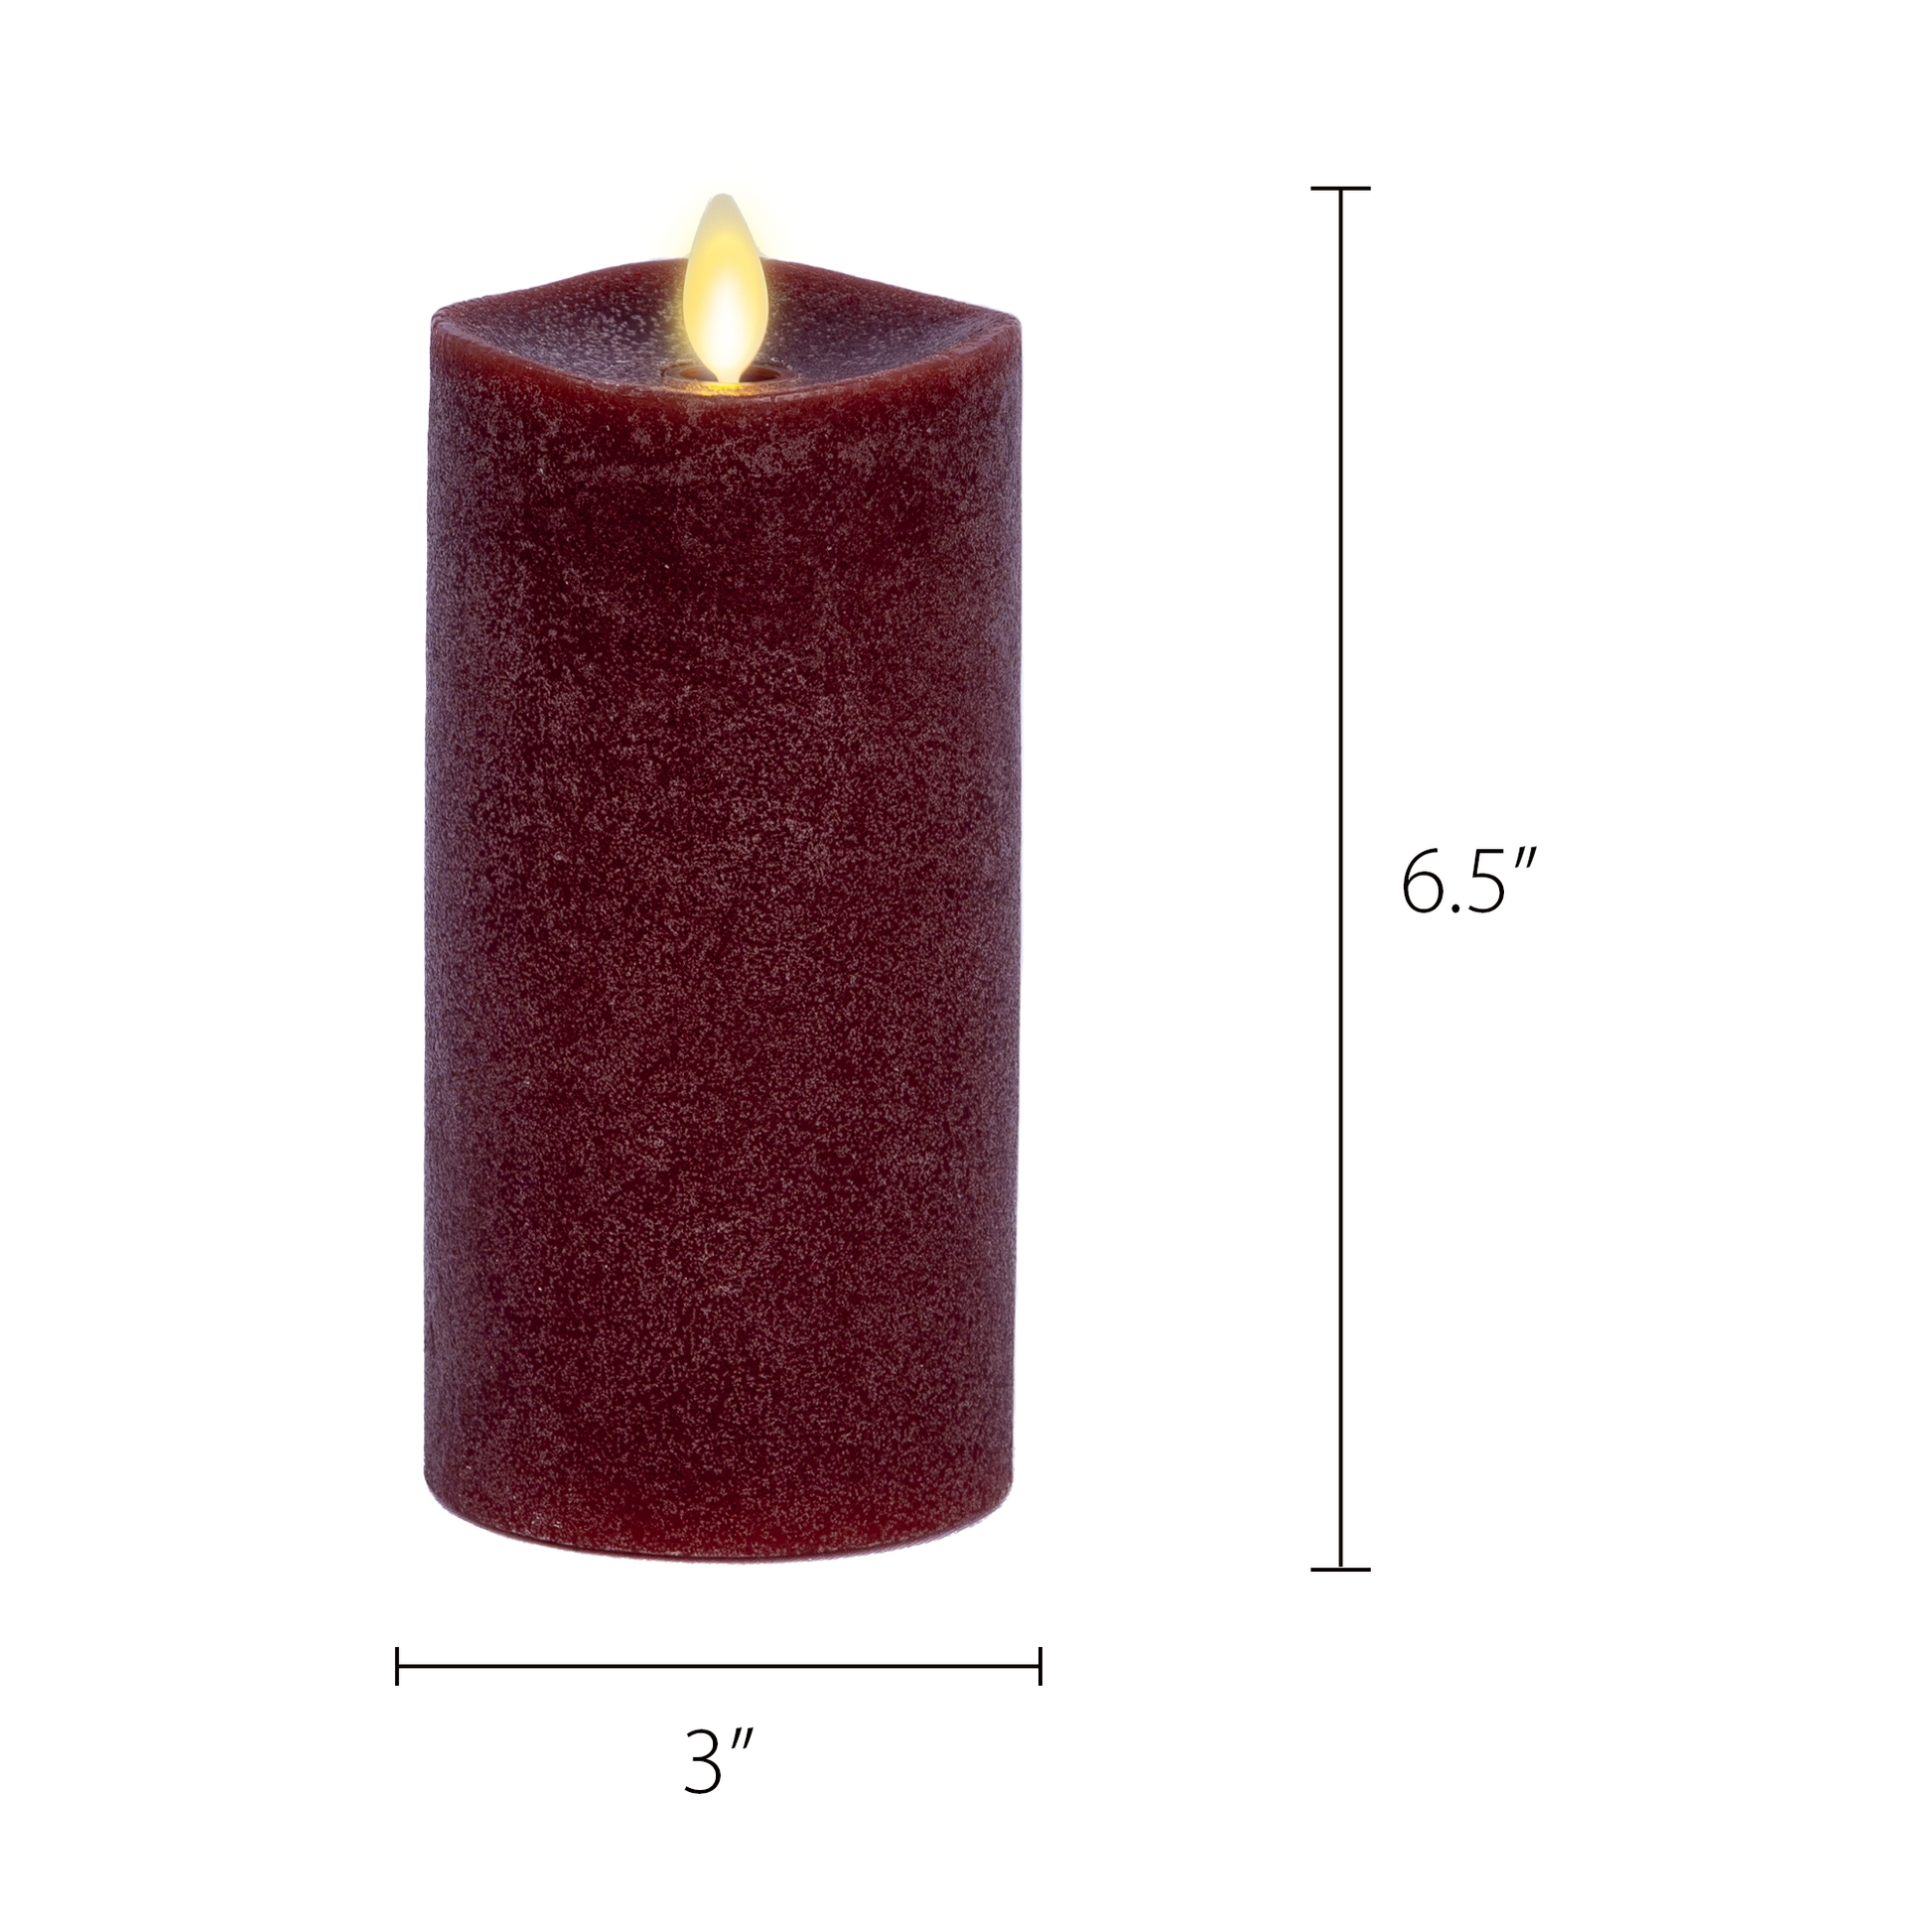 Chalky Raisin Flameless Melted Candle Pillar from Luminara